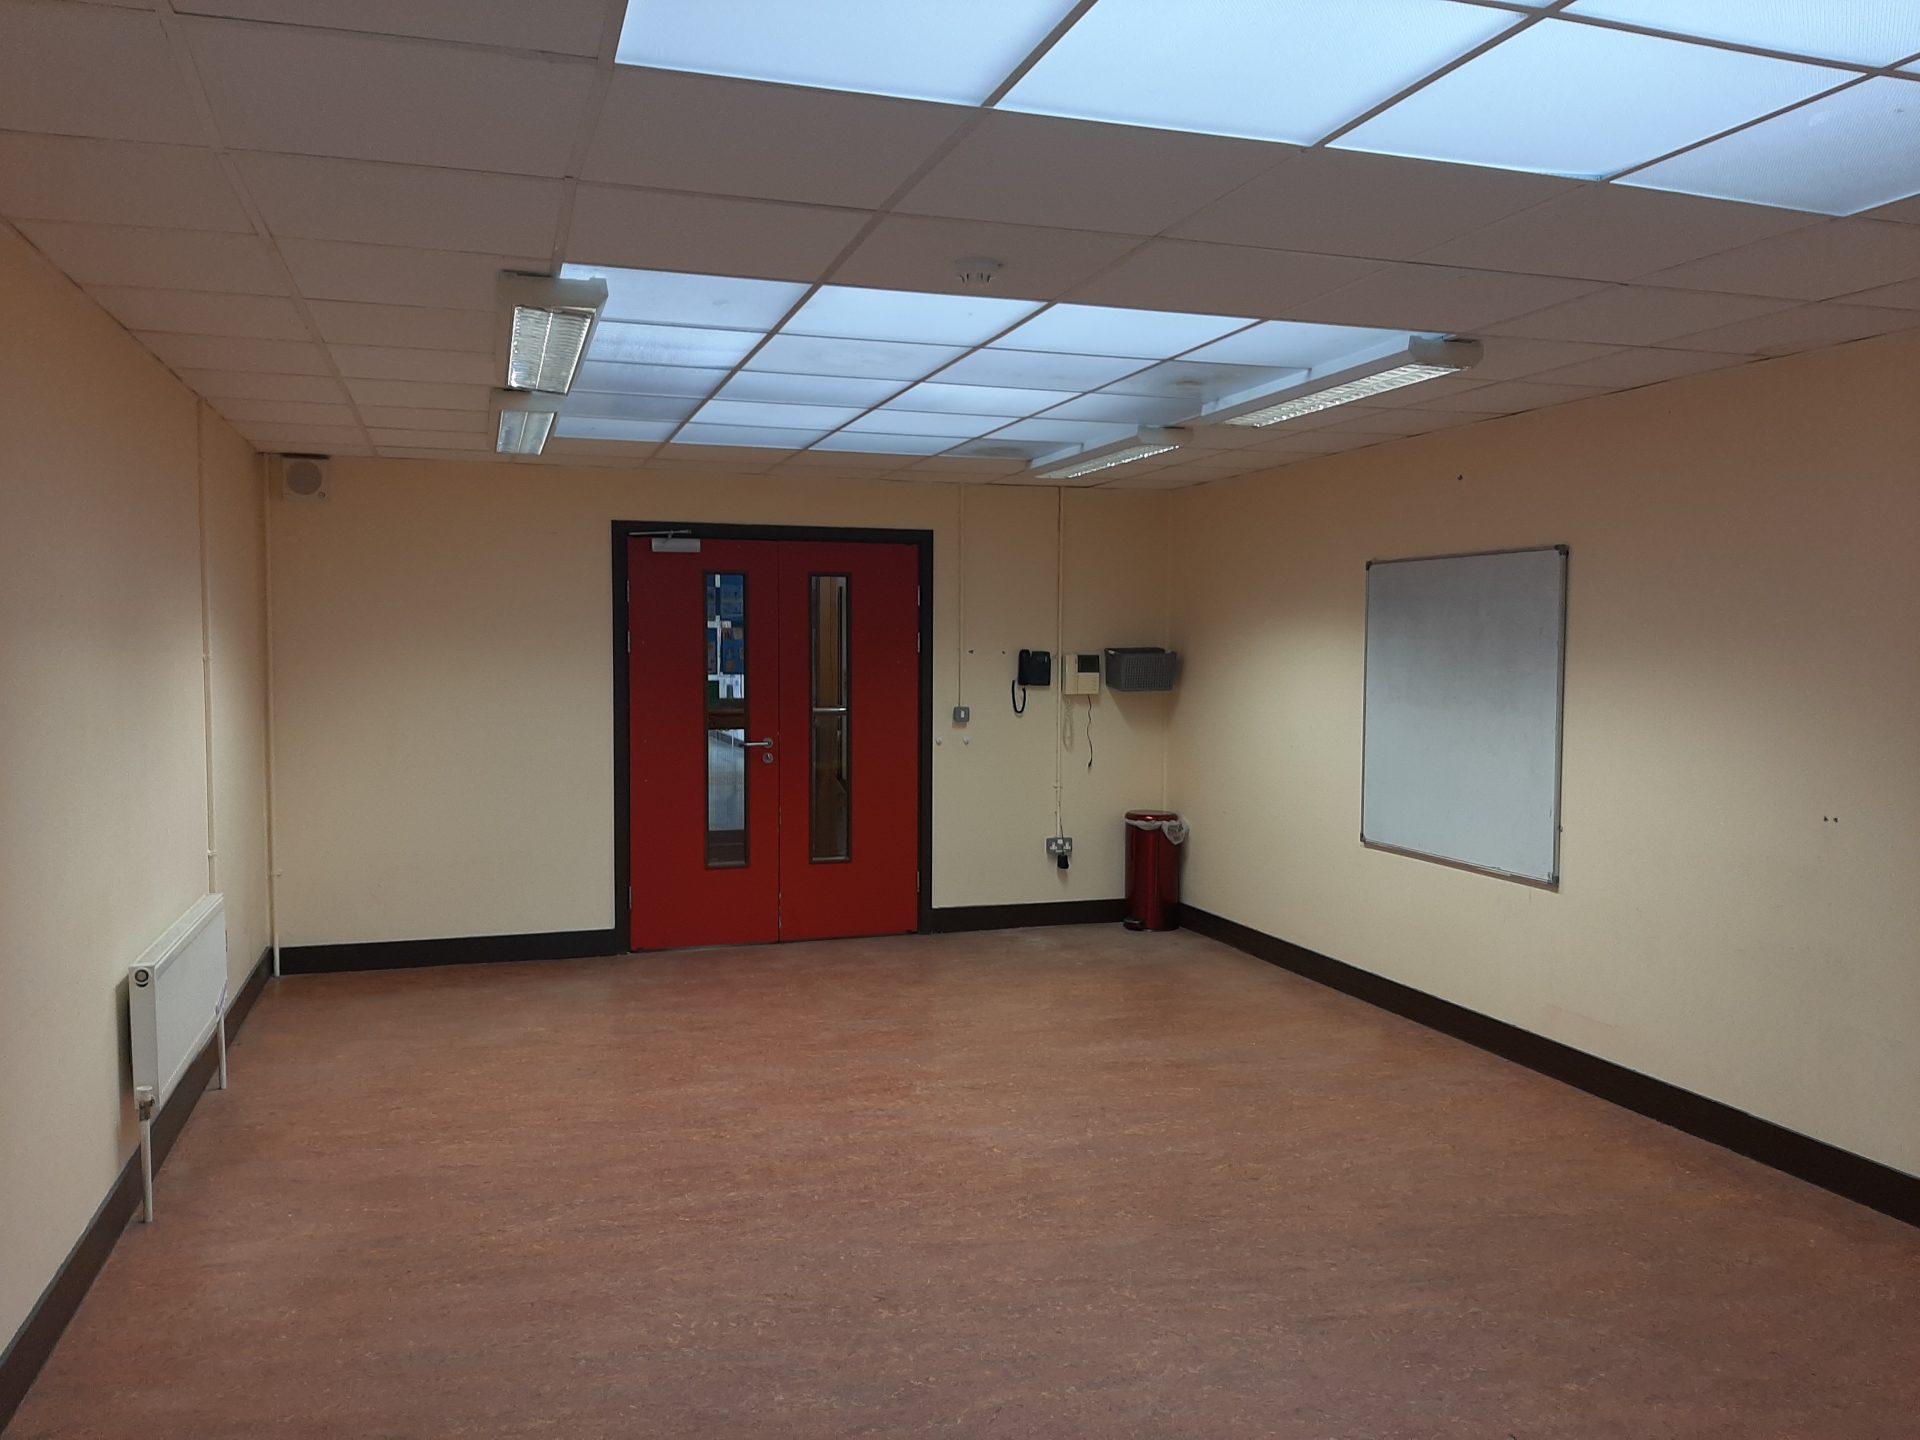 Diswellstown Community Recreation Centre Hallway